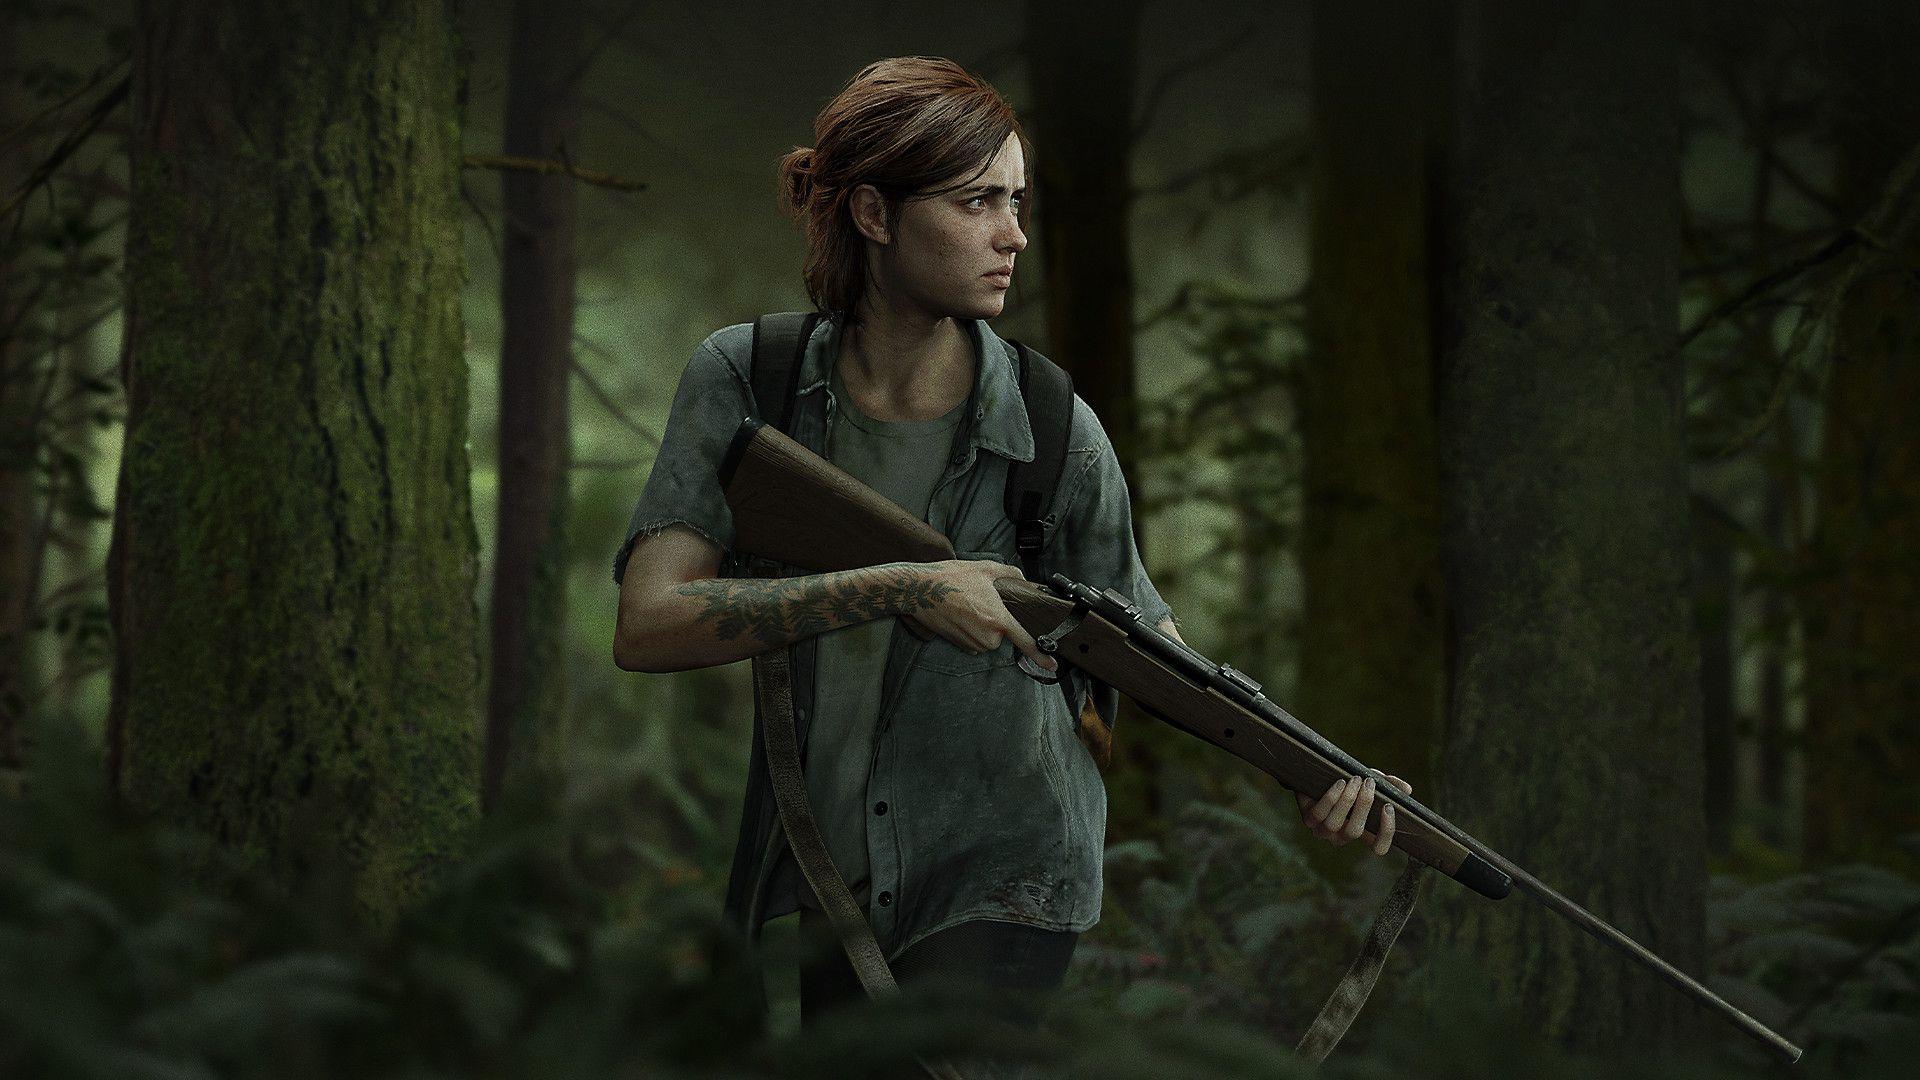 Video Game The Last of Us Part II #1080P #wallpaper #hdwallpaper